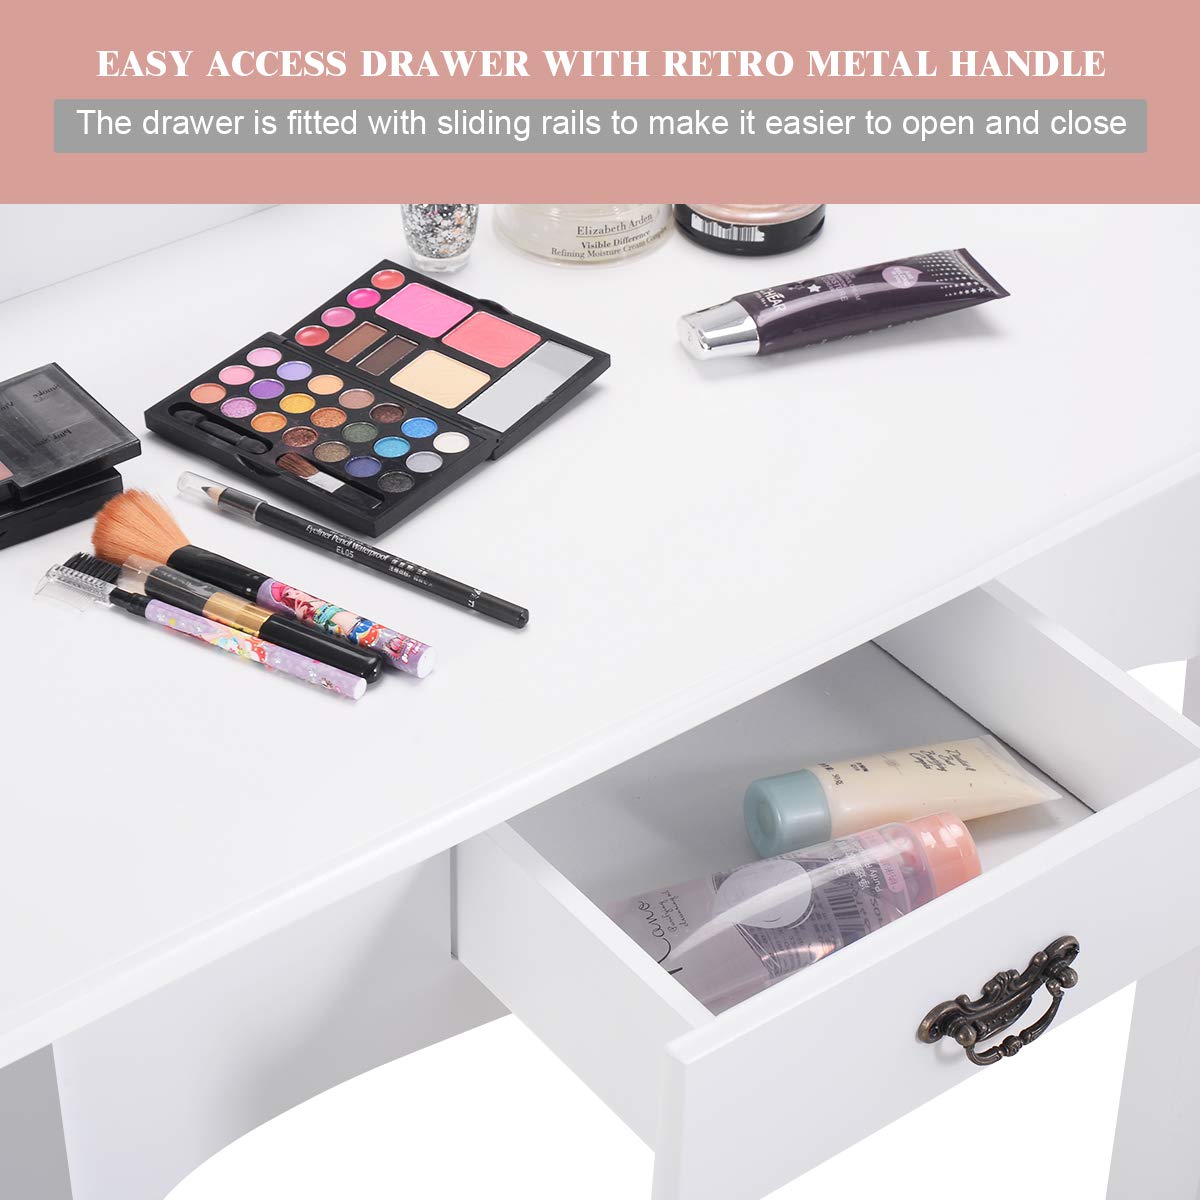 Giantex Bathroom Vanity Table Set w/Mirror Cushioned Stool Makeup Dressing Table Set